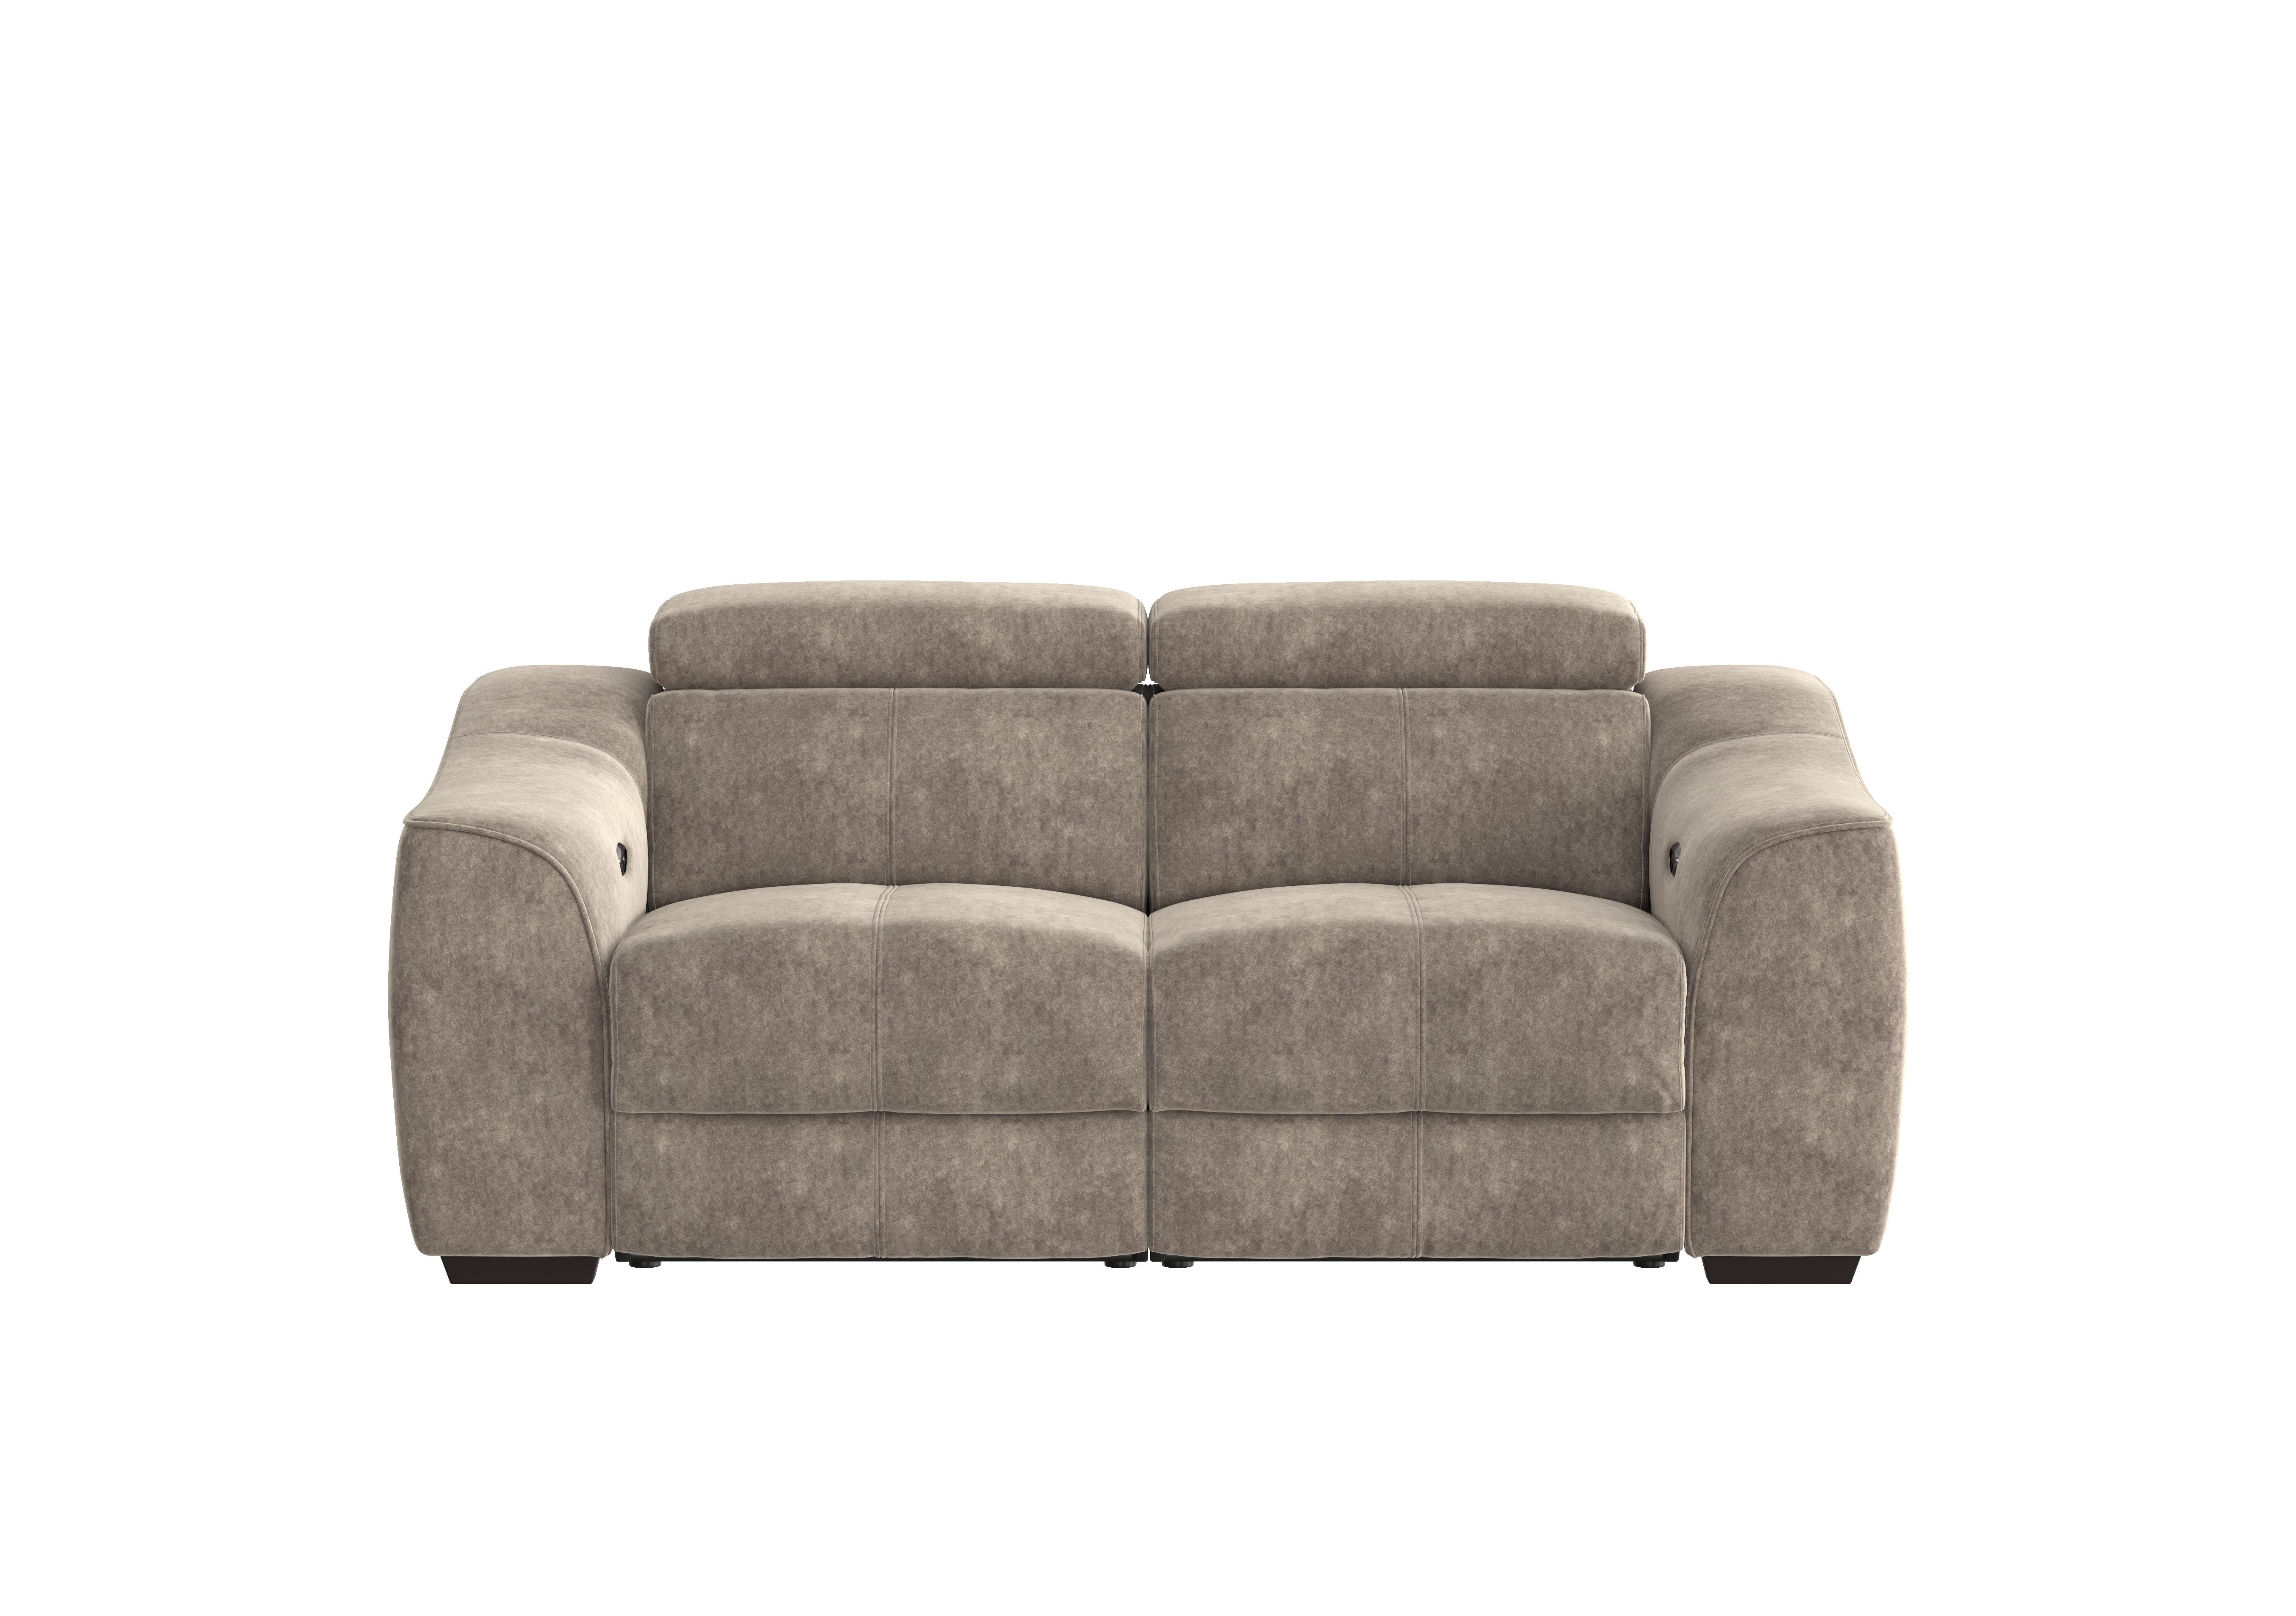 Elixir 2 Seater Fabric Sofa in Bfa-Bnn-R29 Fv1 Mink on Furniture Village